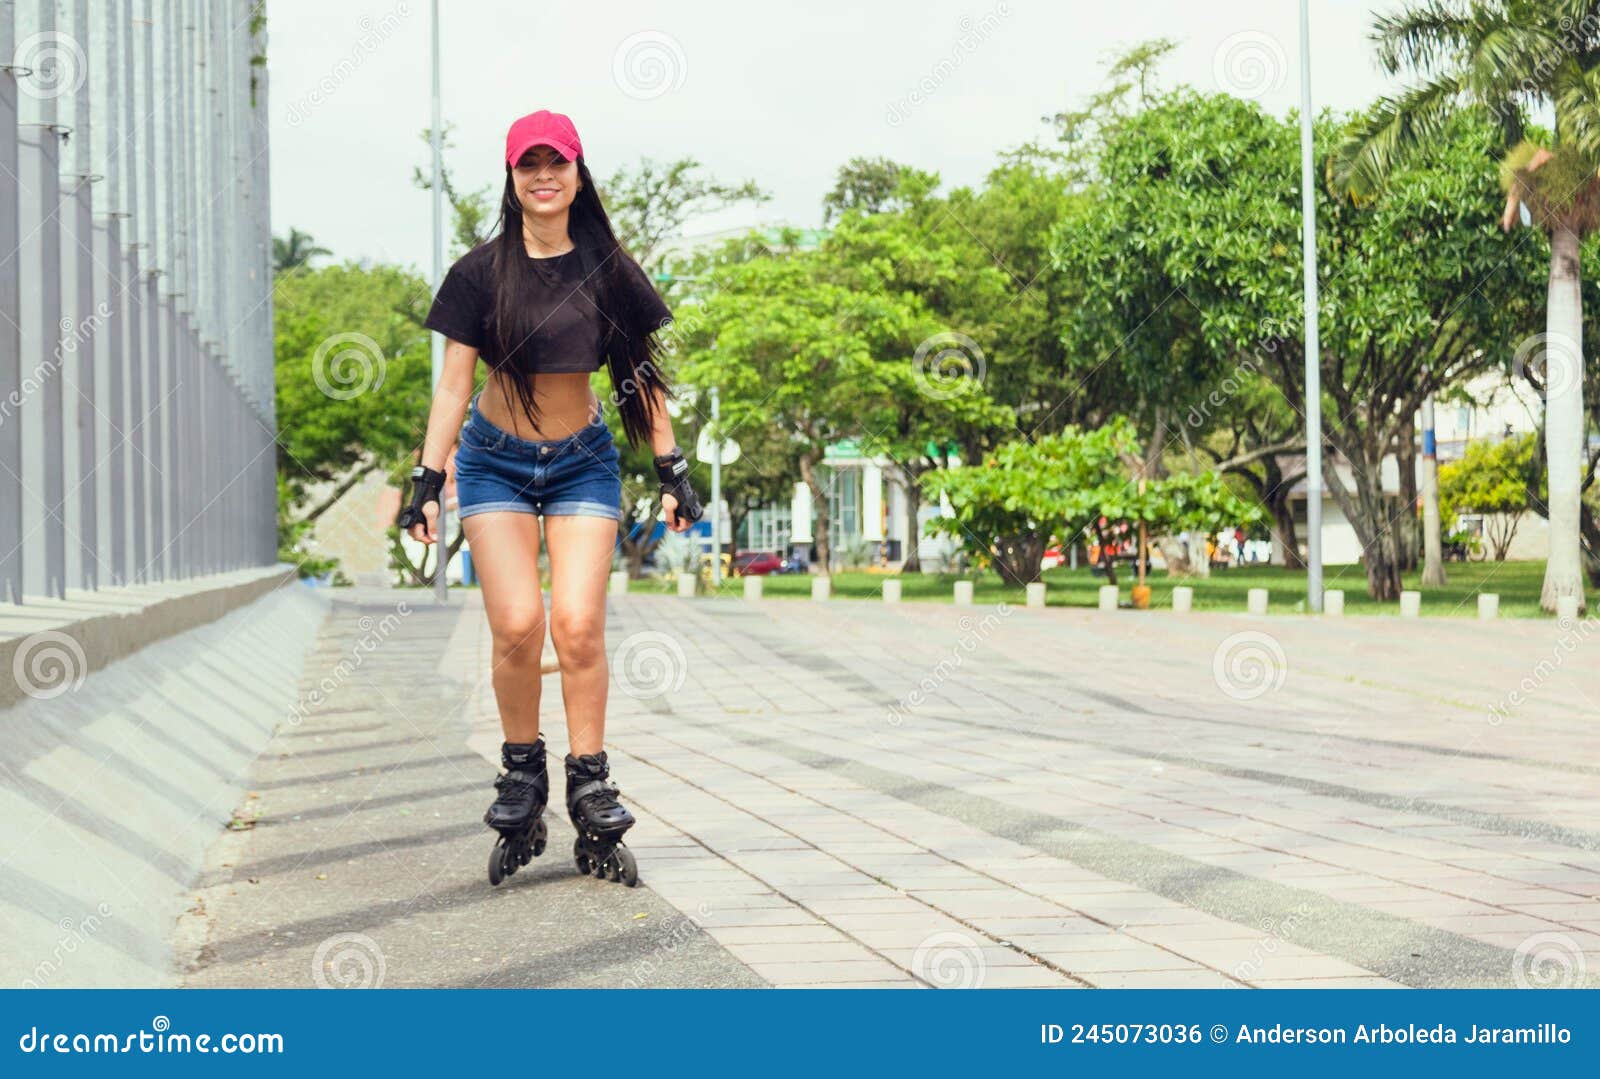 beautiful woman in pink cap skating in the park outdoors having fun